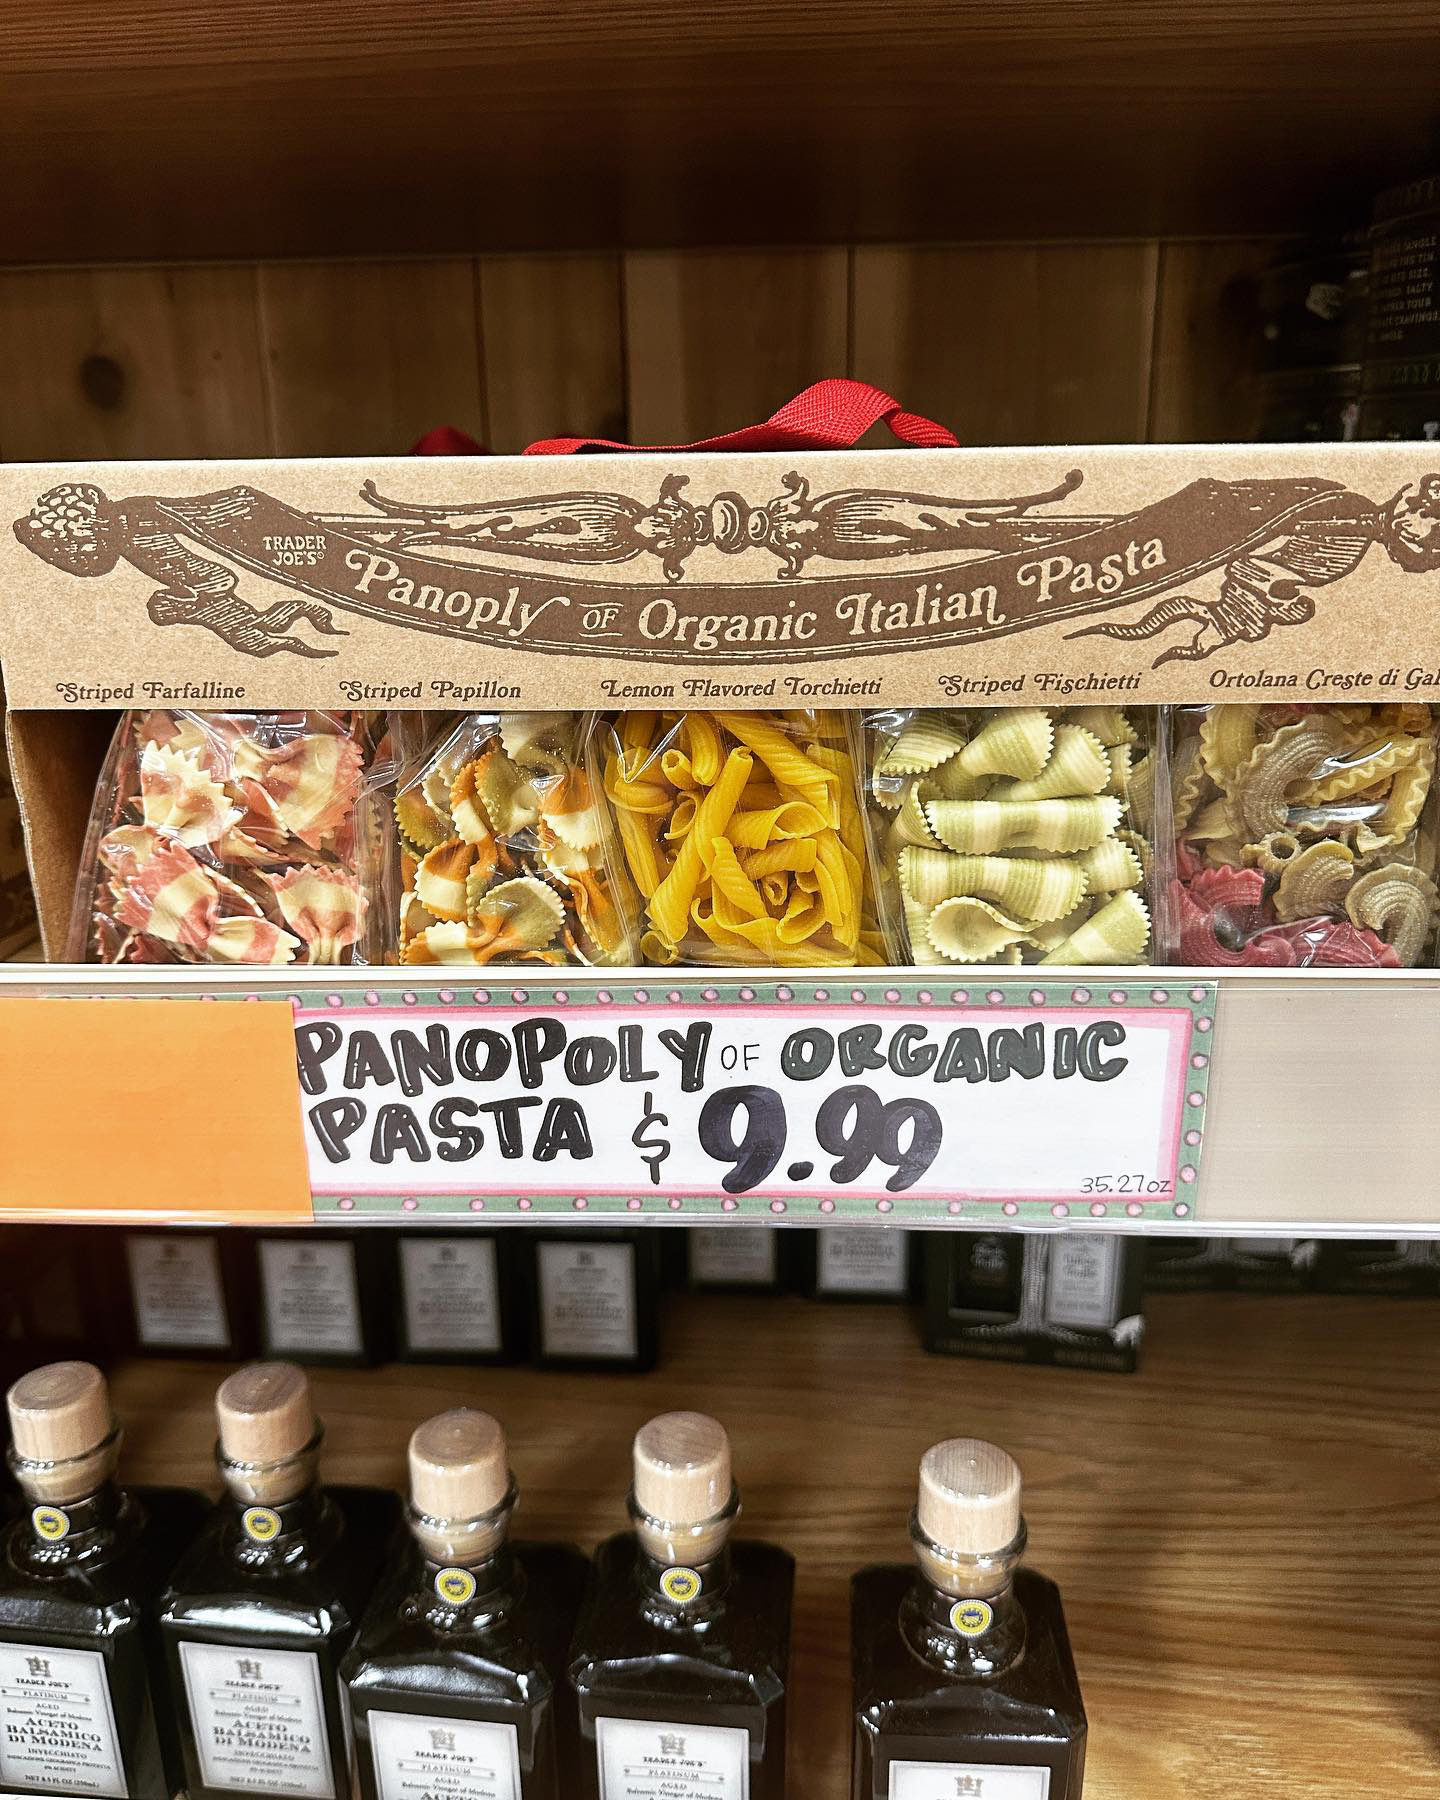 Panoply of Organic Italian Pasta